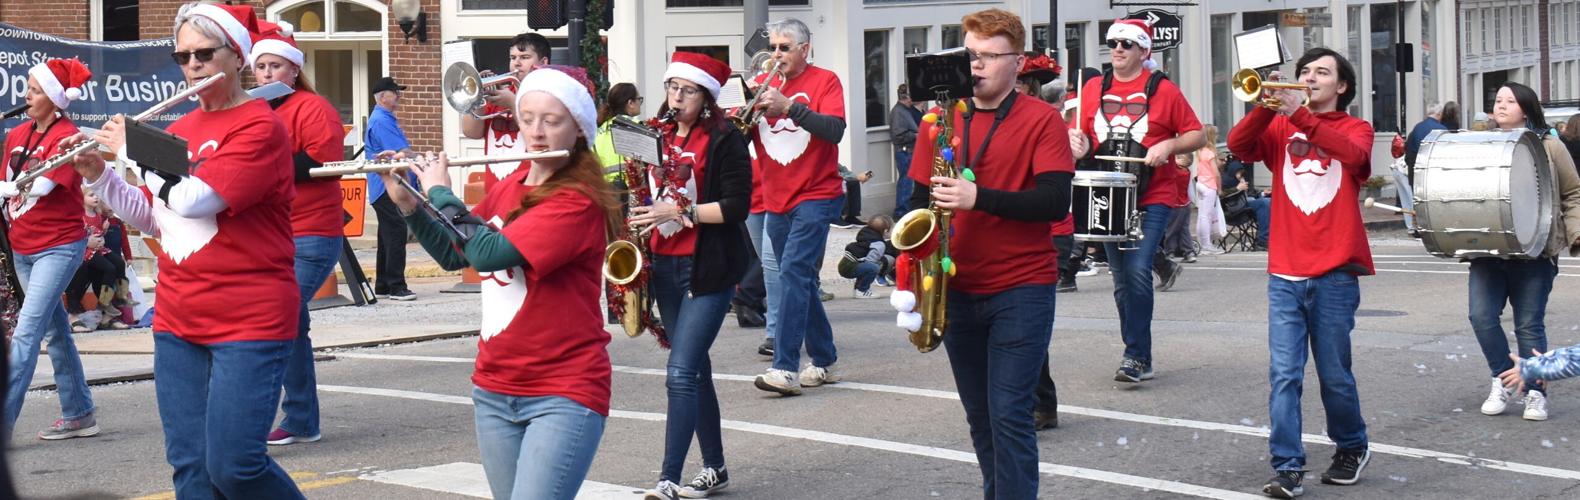 Greeneville Christmas Parade Draws Large Crowd Local News